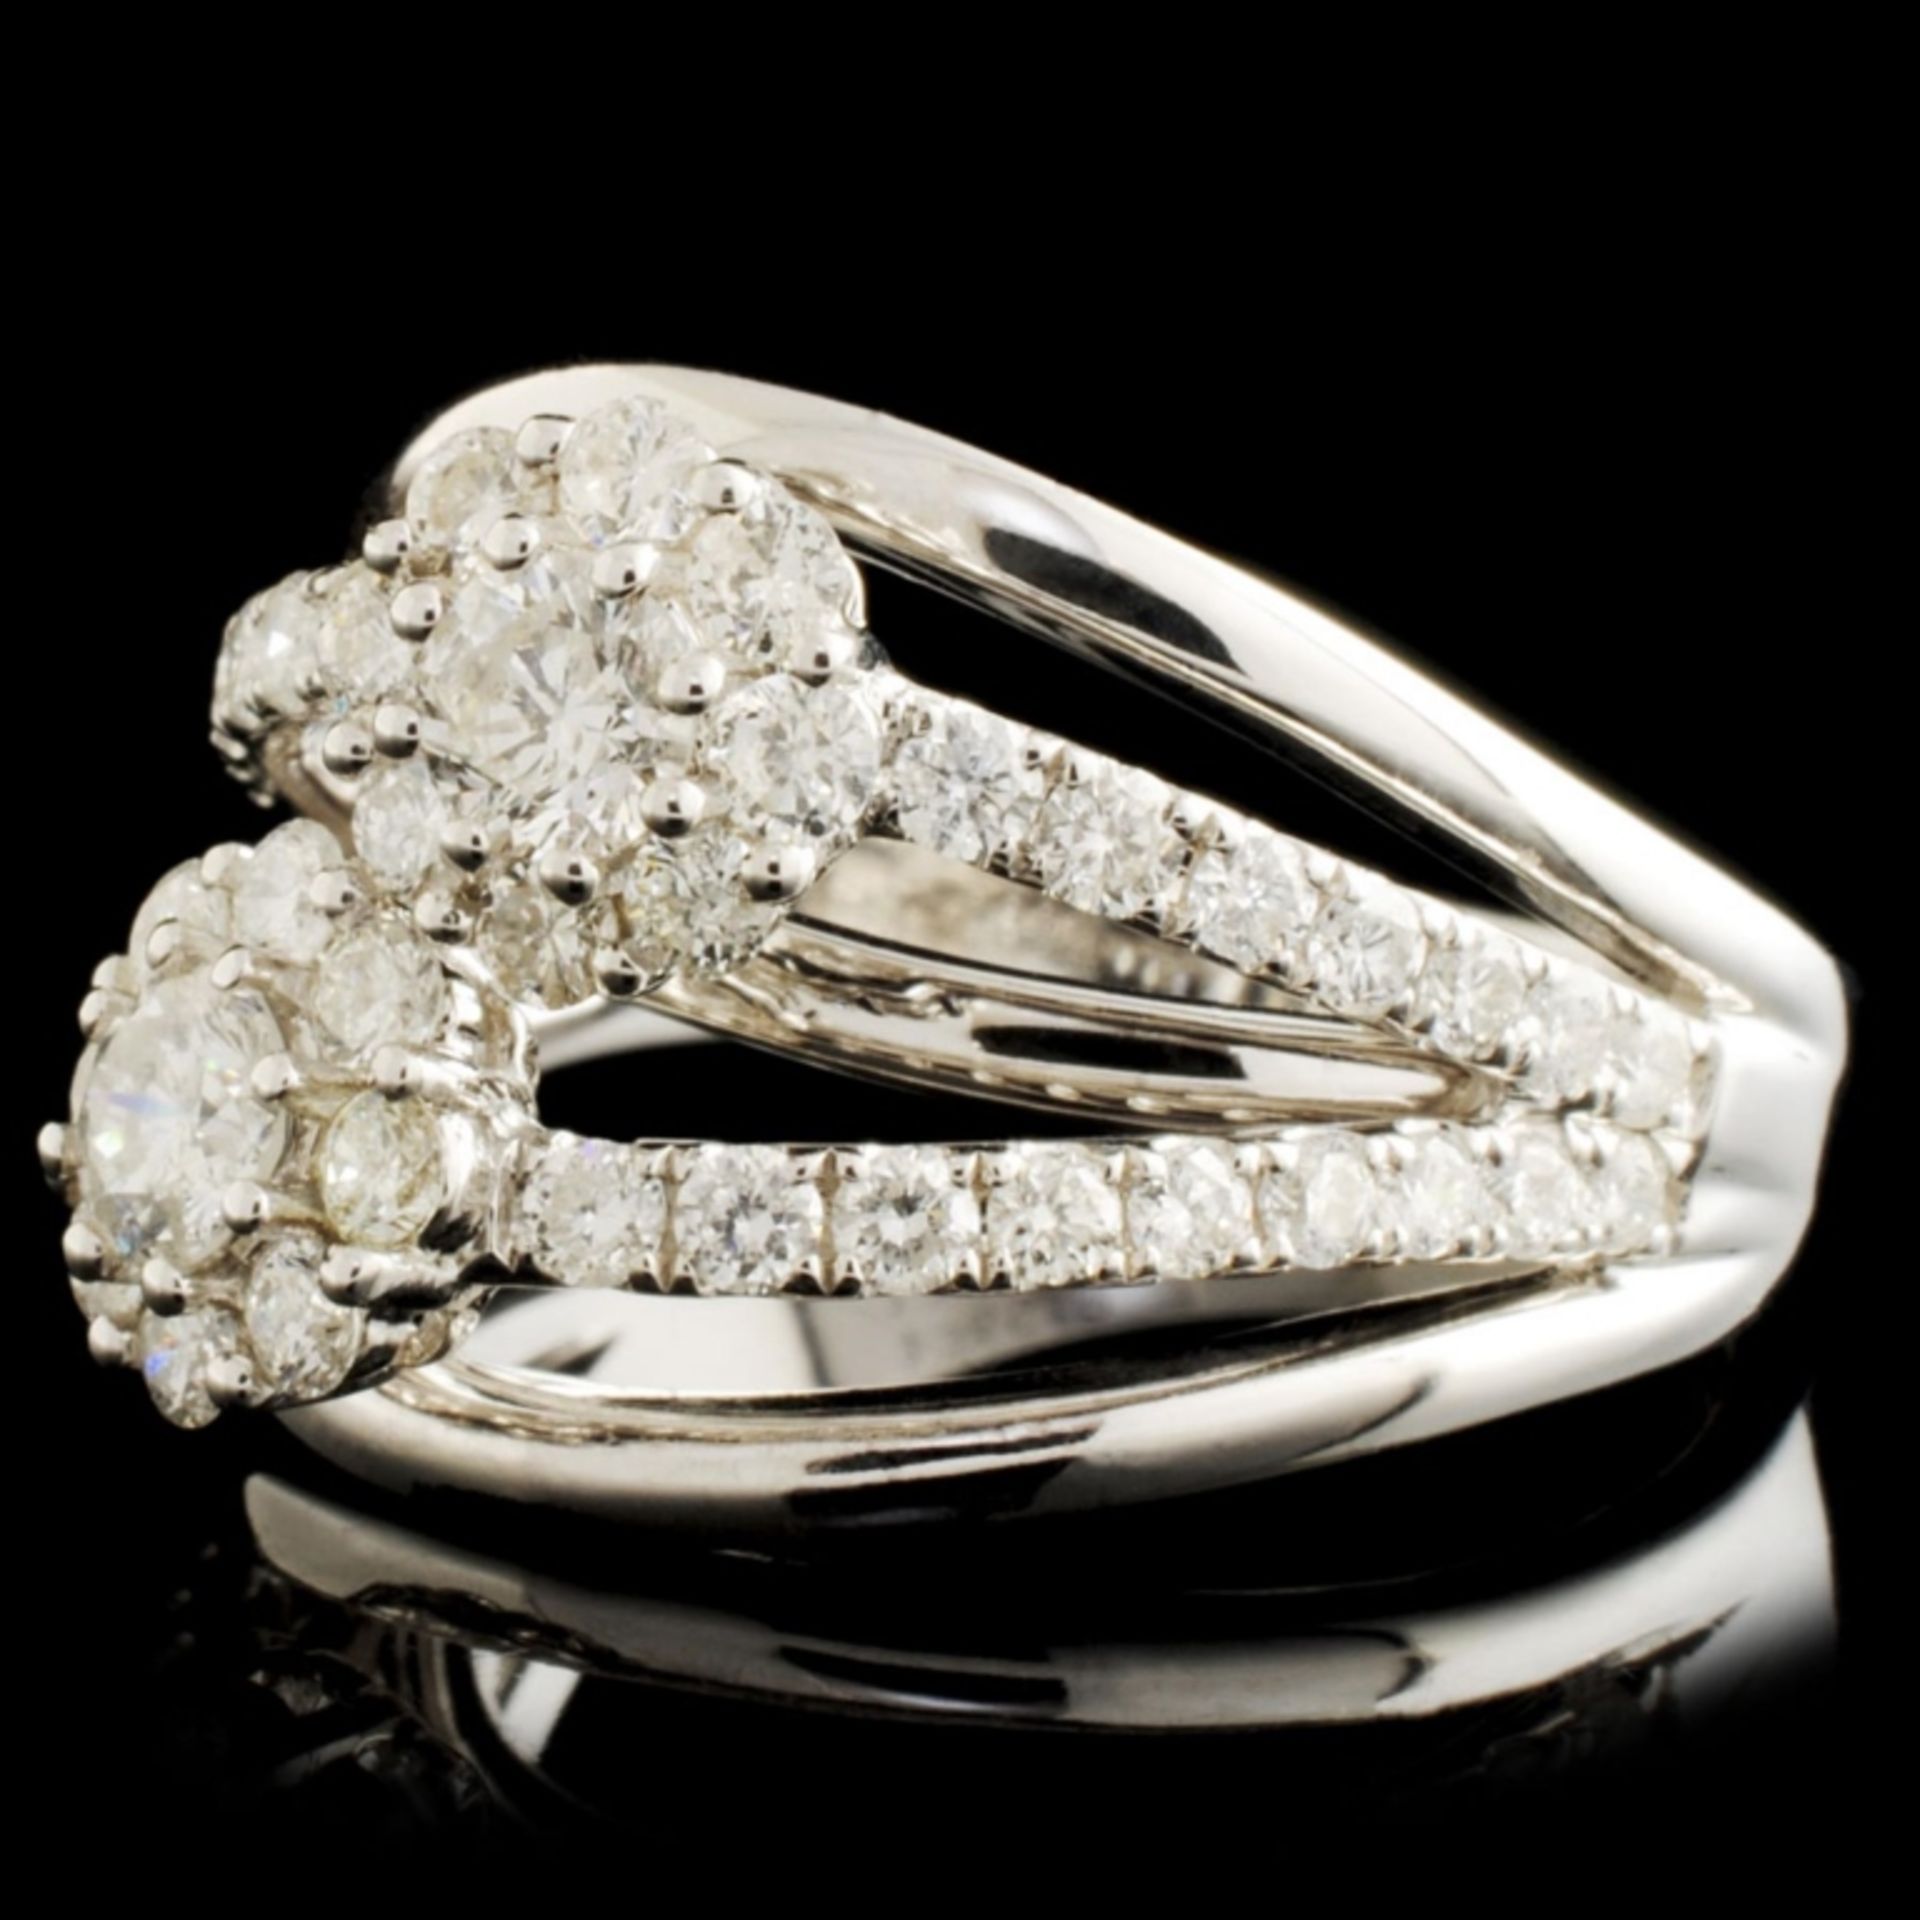 14K Gold 1.48ctw Diamond Ring - Image 2 of 5